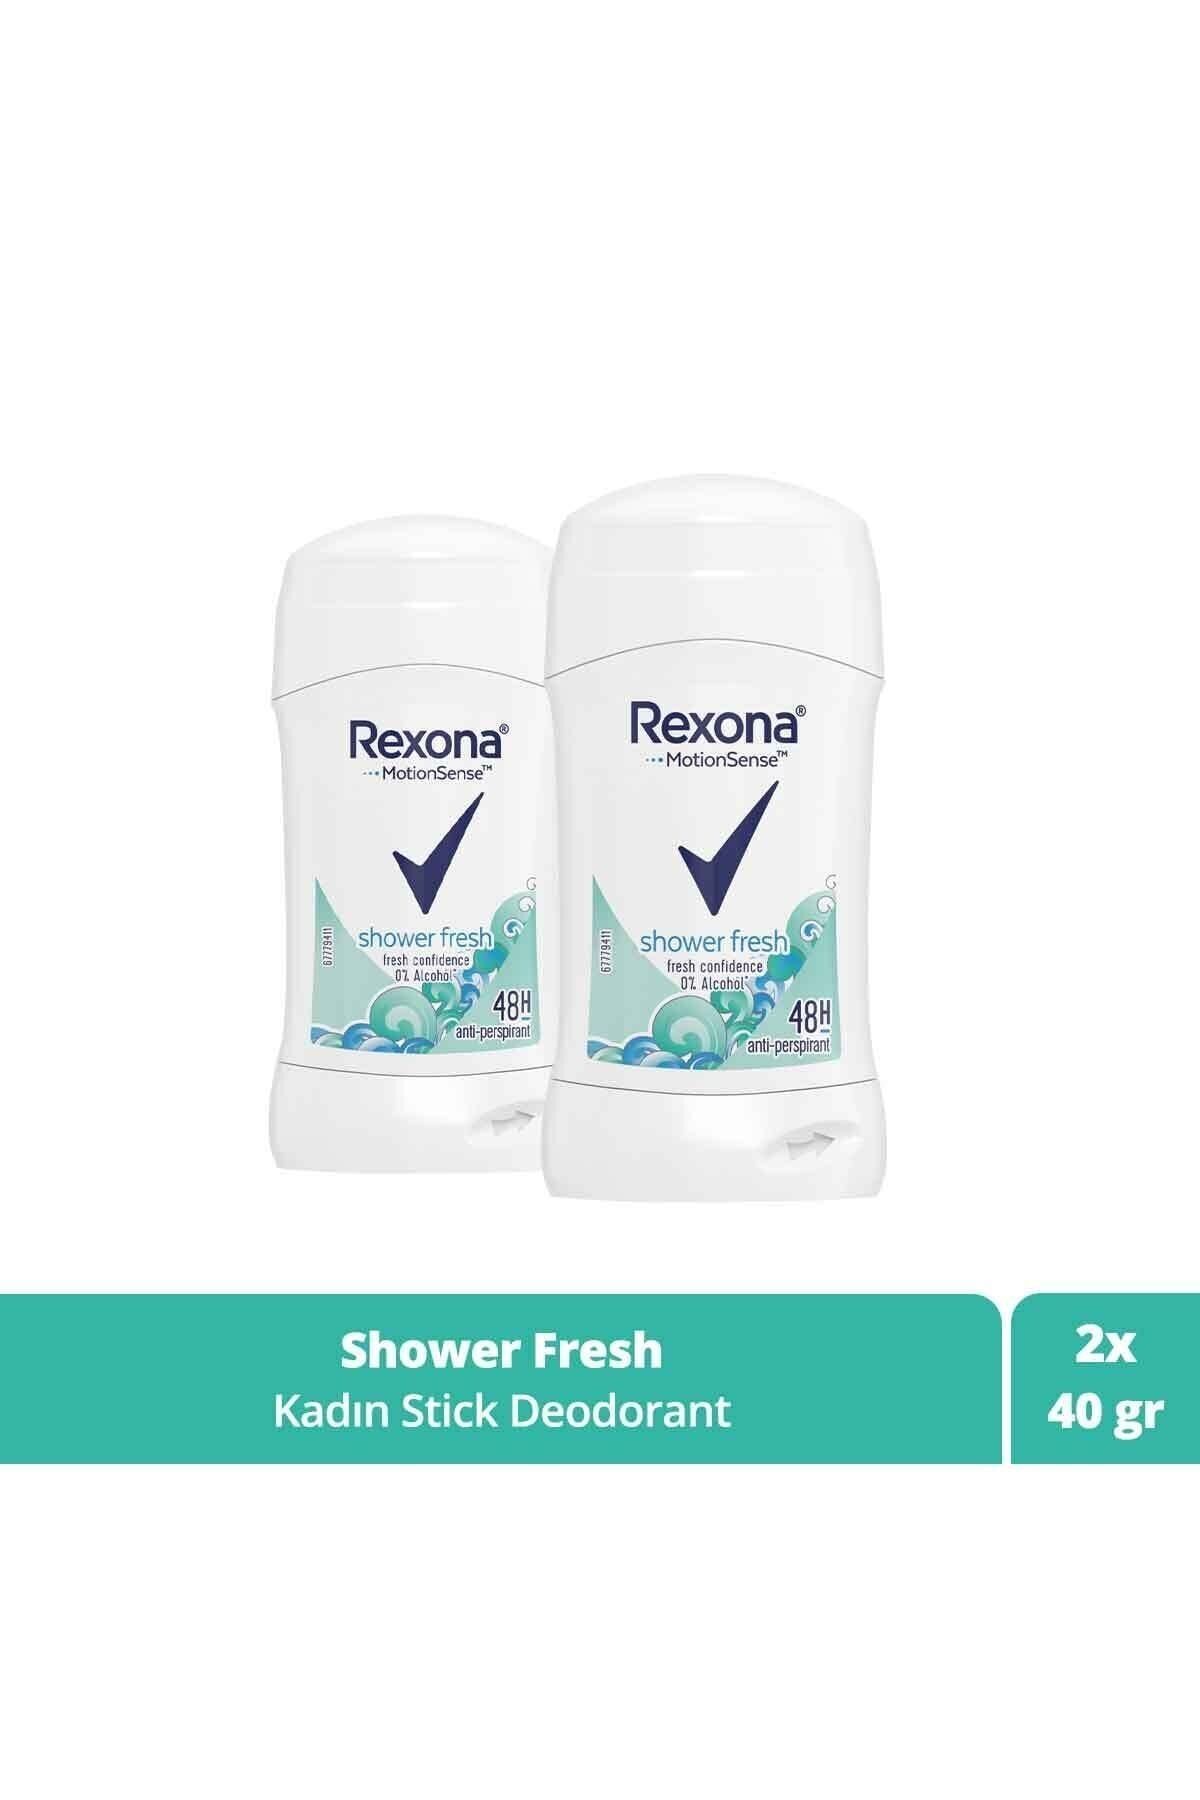 Rexona Motion Sense Kadın Stick Deodorant Shower Fresh 48 Saat Koruma 40 g X 2 Adet